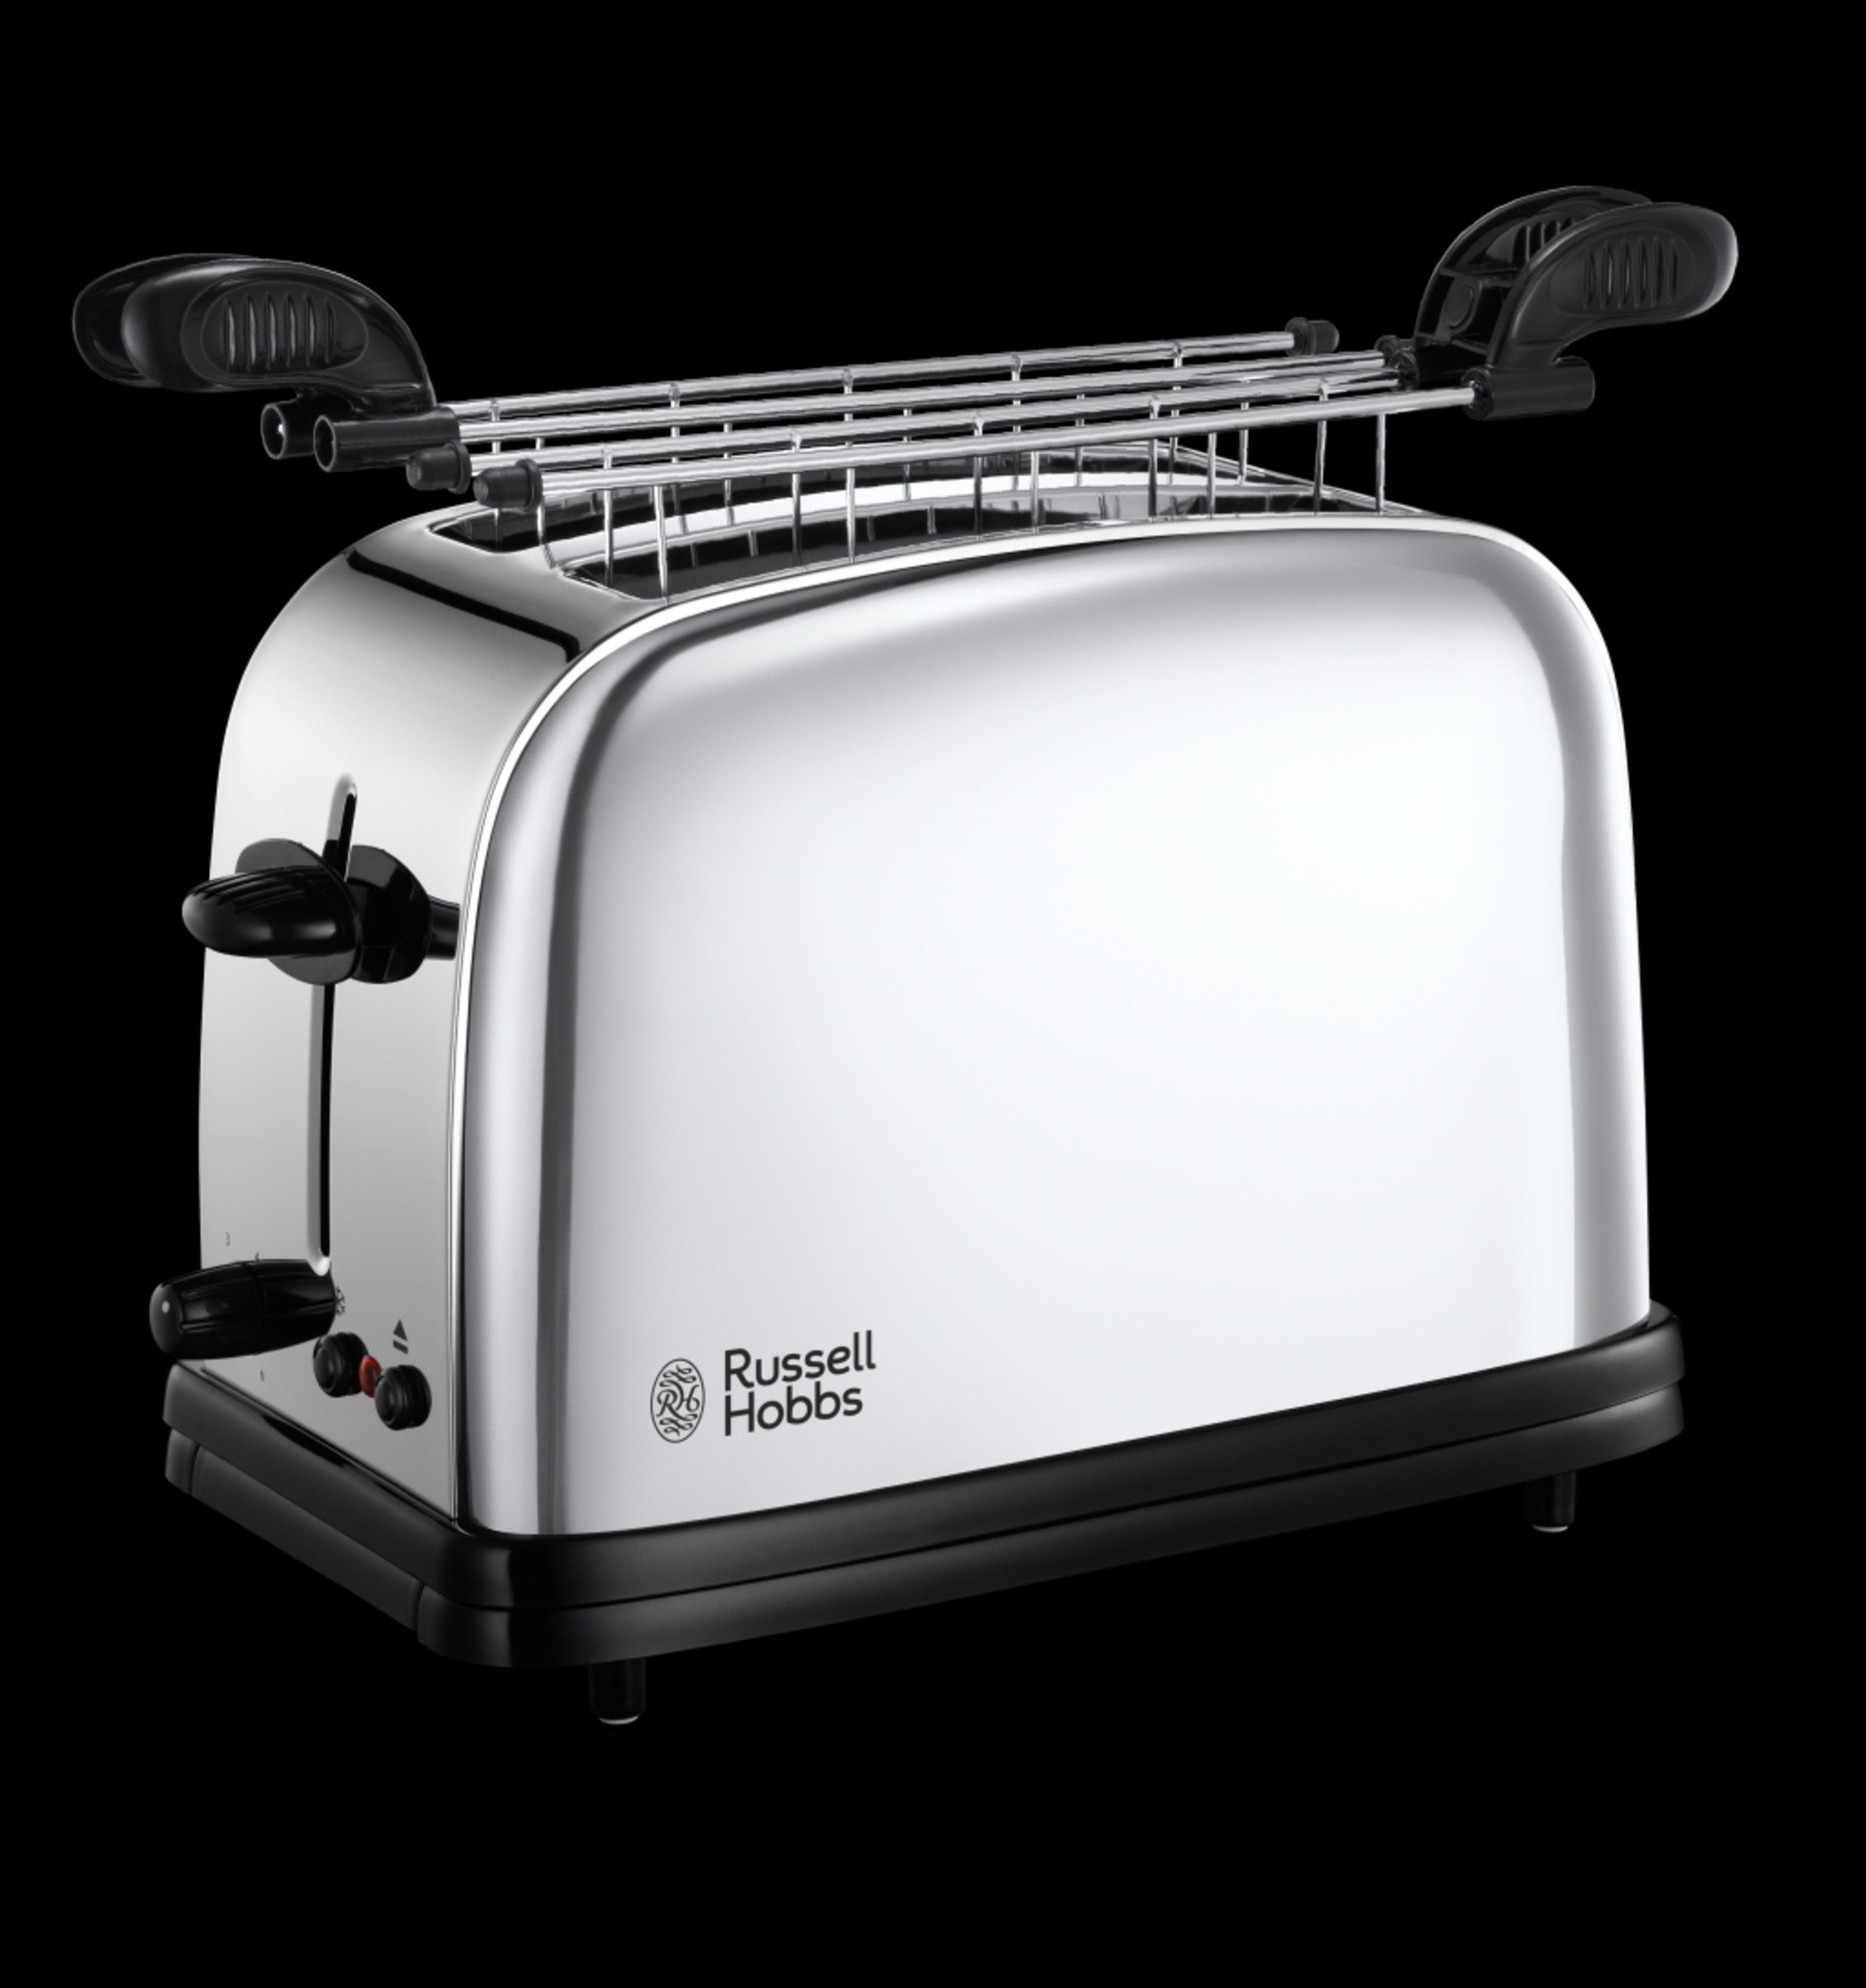 Edelstahl/Schwarz 23310-57 Toaster 2) RUSSELL SANDWICHTOASTER Watt, VICTORY (1200 HOBBS Schlitze: